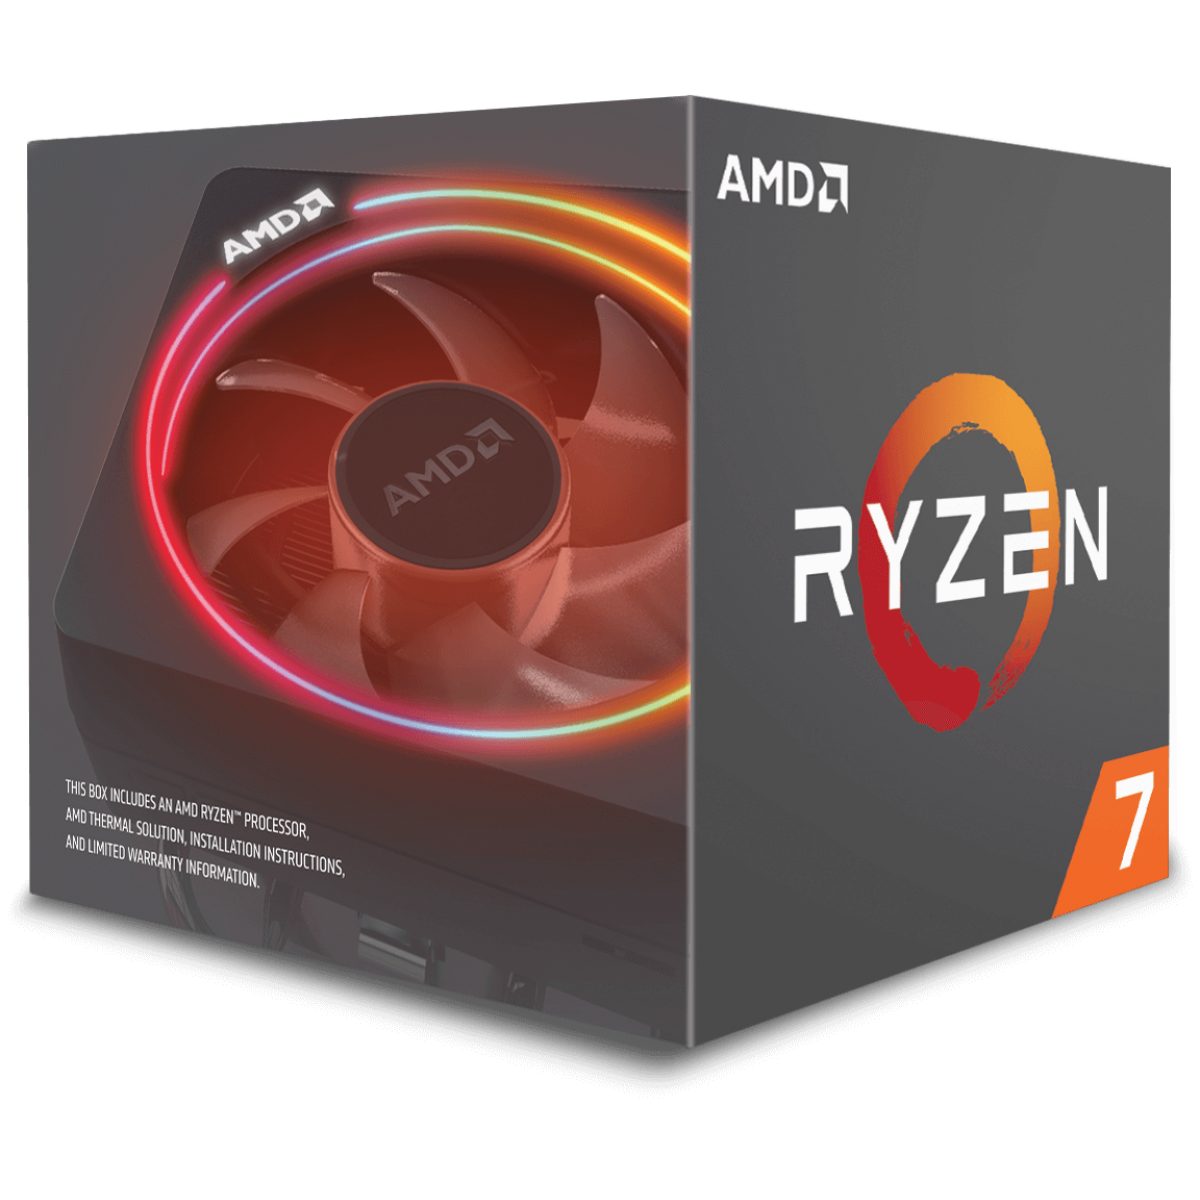 Processador AMD Ryzen 7 2700X 3.7GHz (4.35GHz Turbo), 8-Cores 16-Threads, Cooler Wraith Prism RGB, AM4, YD270XBGAFBOX, S/ Video